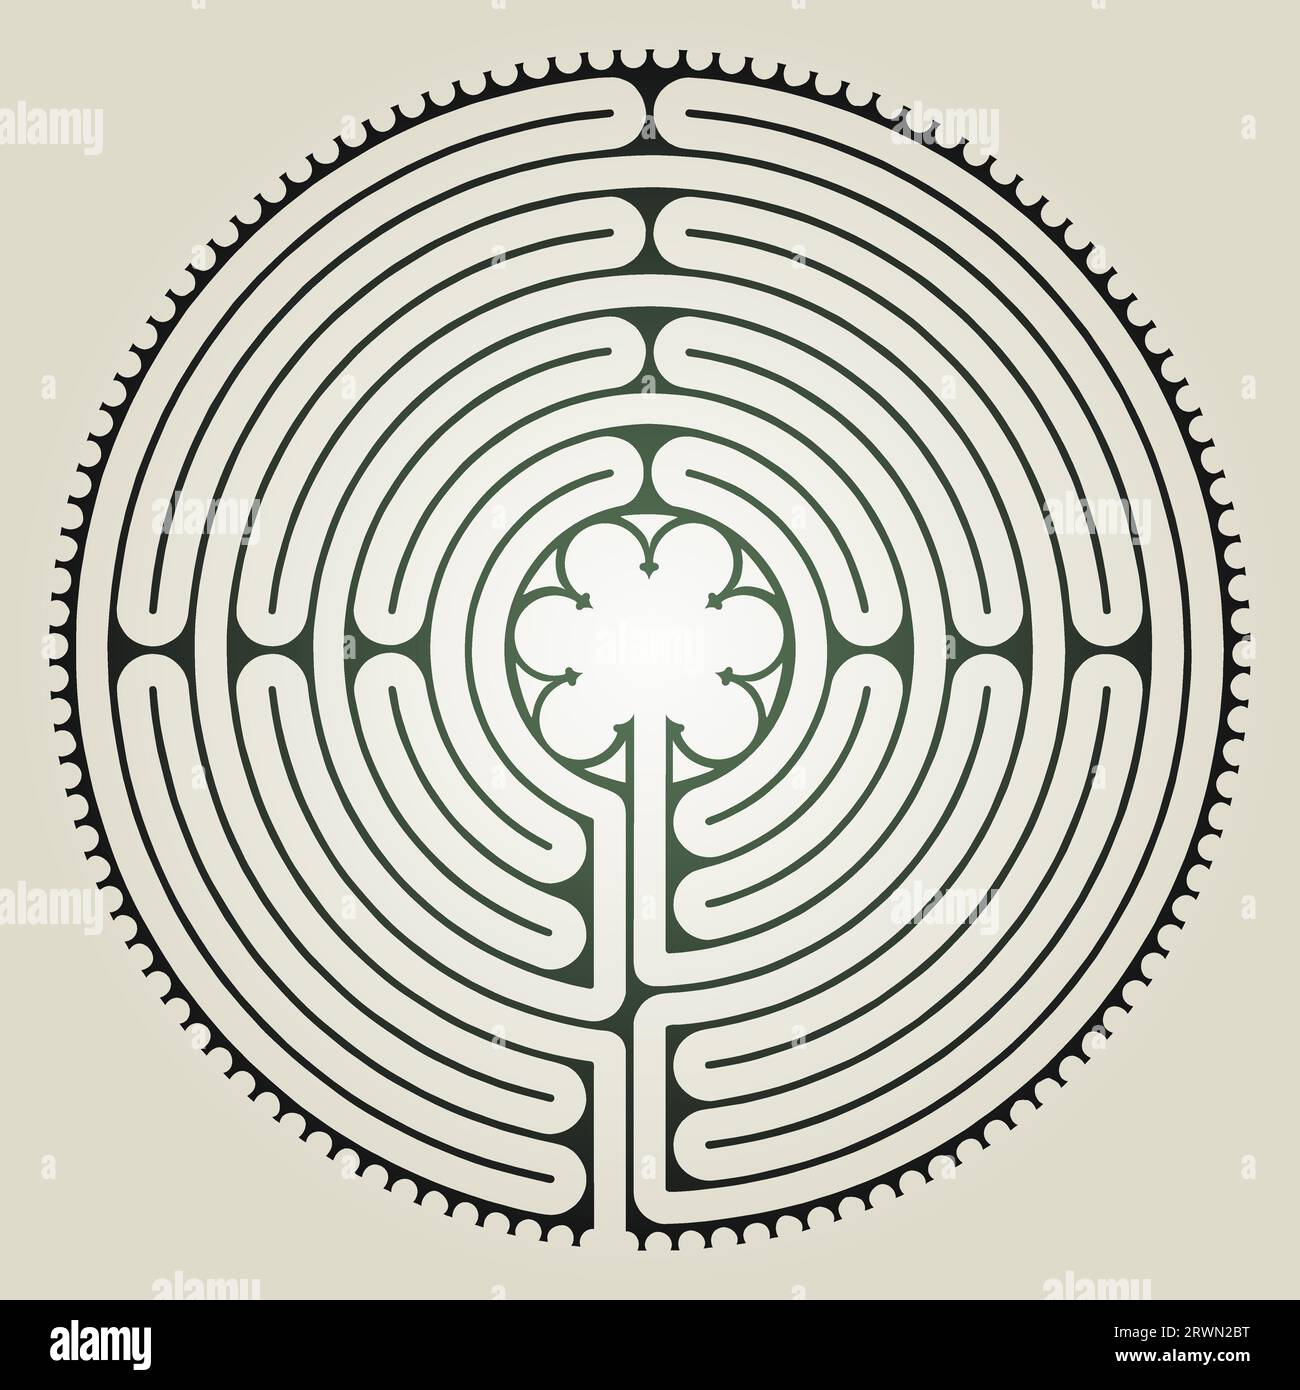 Labyrinth Kathedrale von Chartres Illustration Vektor - Symbolismus Meditationsgeschichte - Blumenmotiv - Heilige Geometrie Stock Vektor